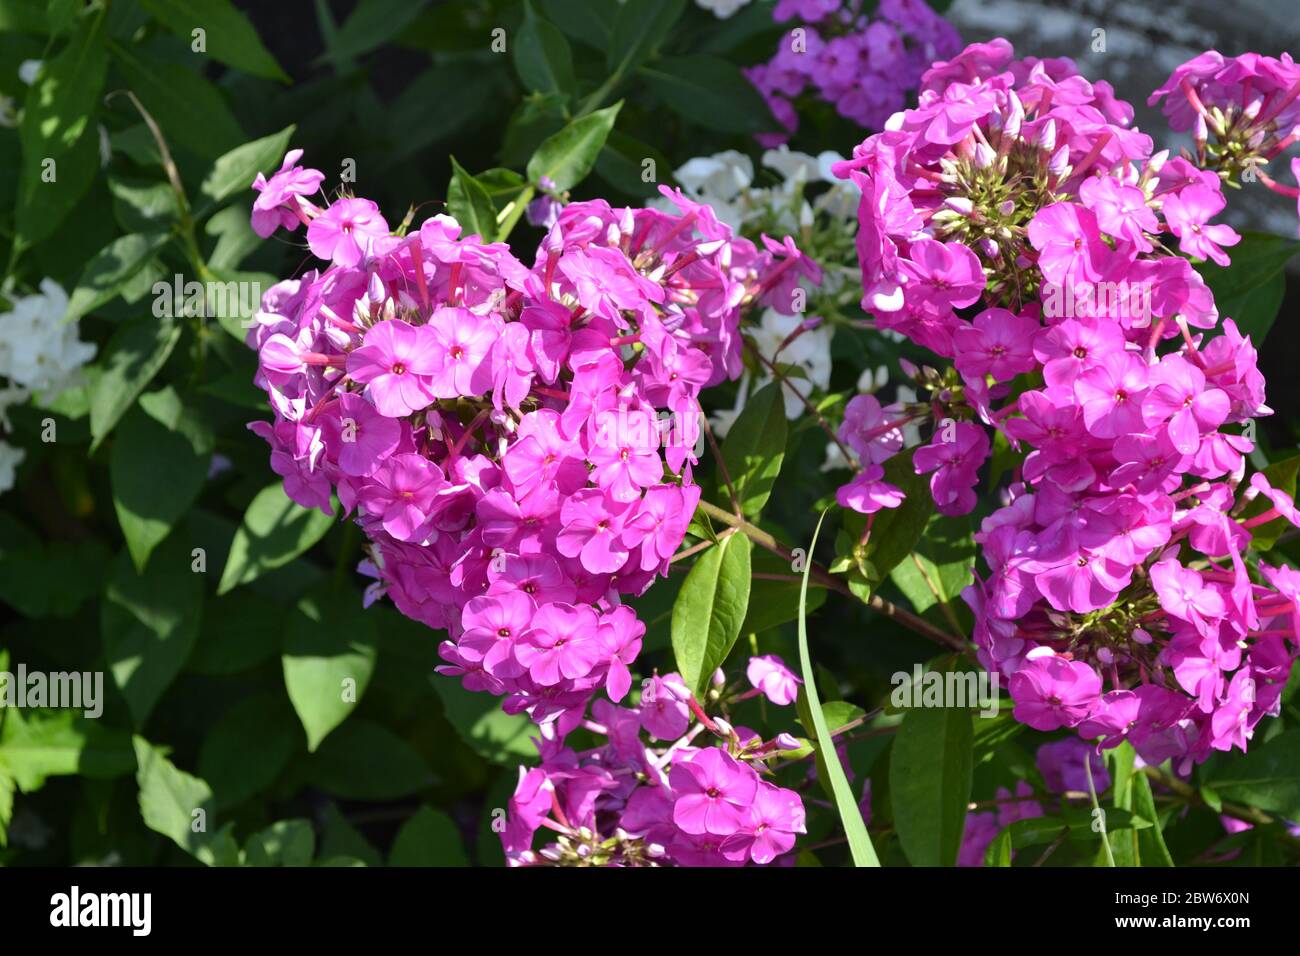 Green. Phlox flower. Perennial plant. High branches. Purple flowers Stock Photo